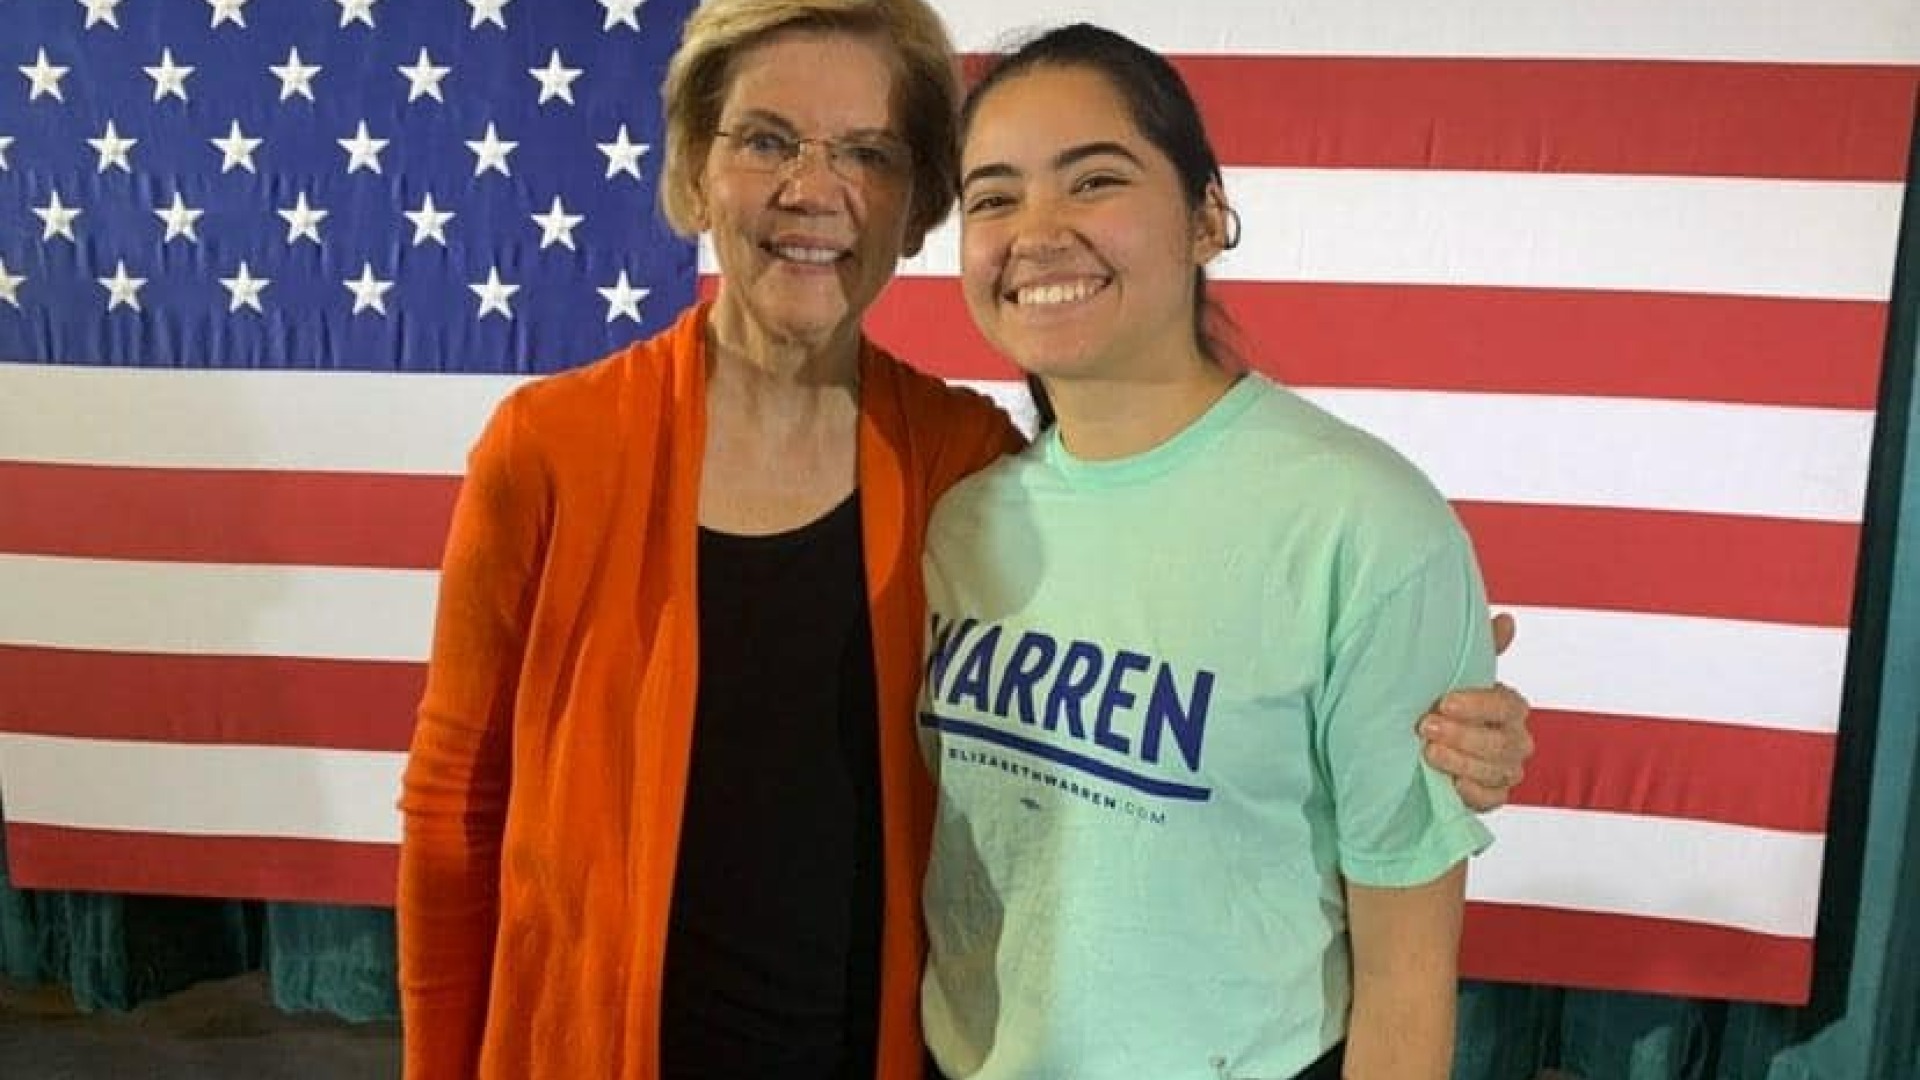 Student Cinthia's picture with Senator Elizabeth Warren's